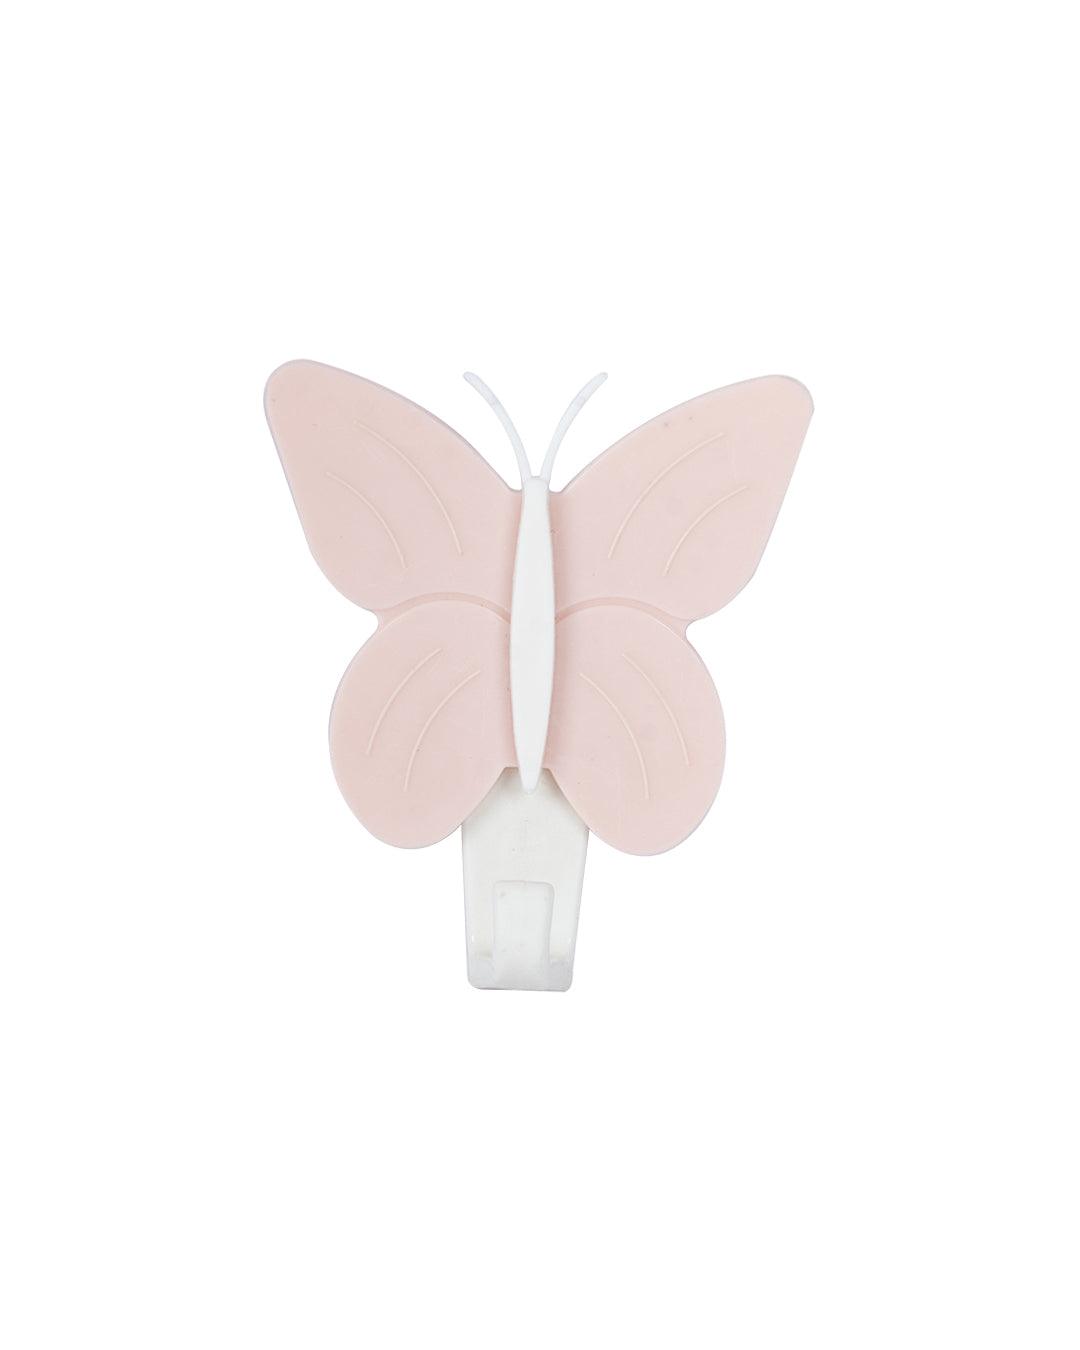 Sticky Hooks, Self Adhesive Back, Butterfly Shaped Design, Pink, Plastic - MARKET 99